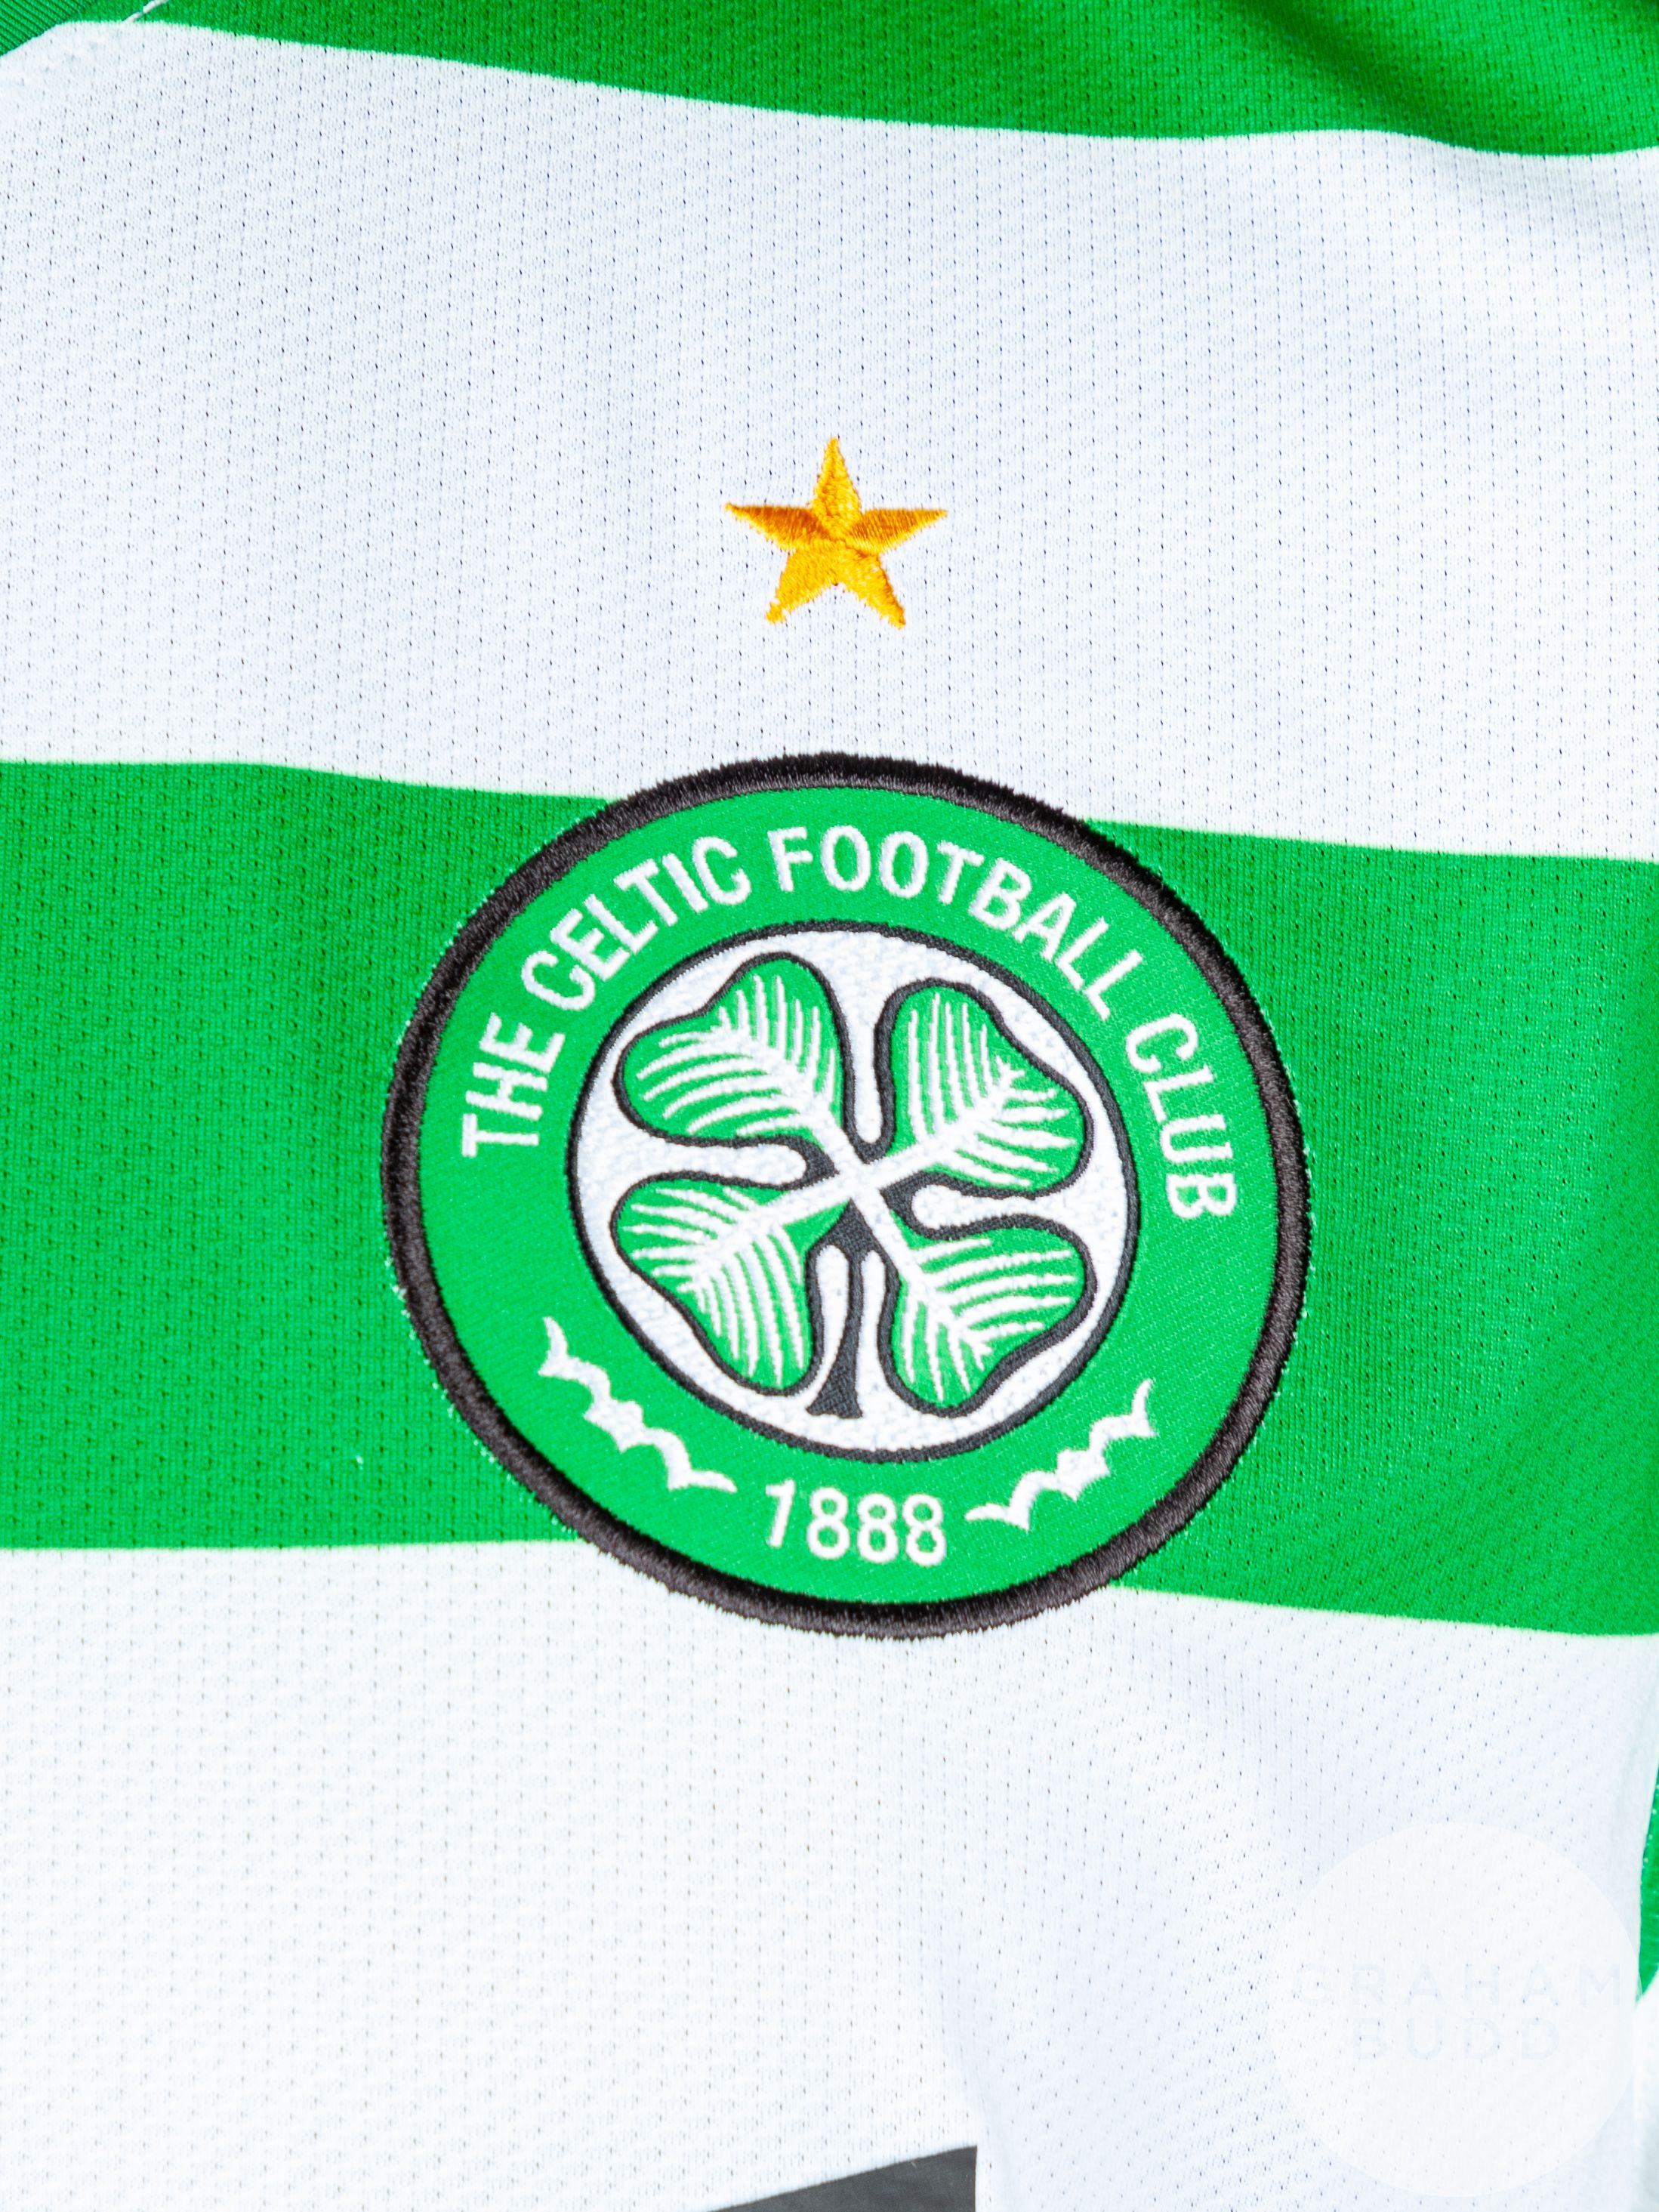 Robbie Keane green and white No.7 Celtic v. Aberdeen short-sleeved shirt - Image 3 of 5